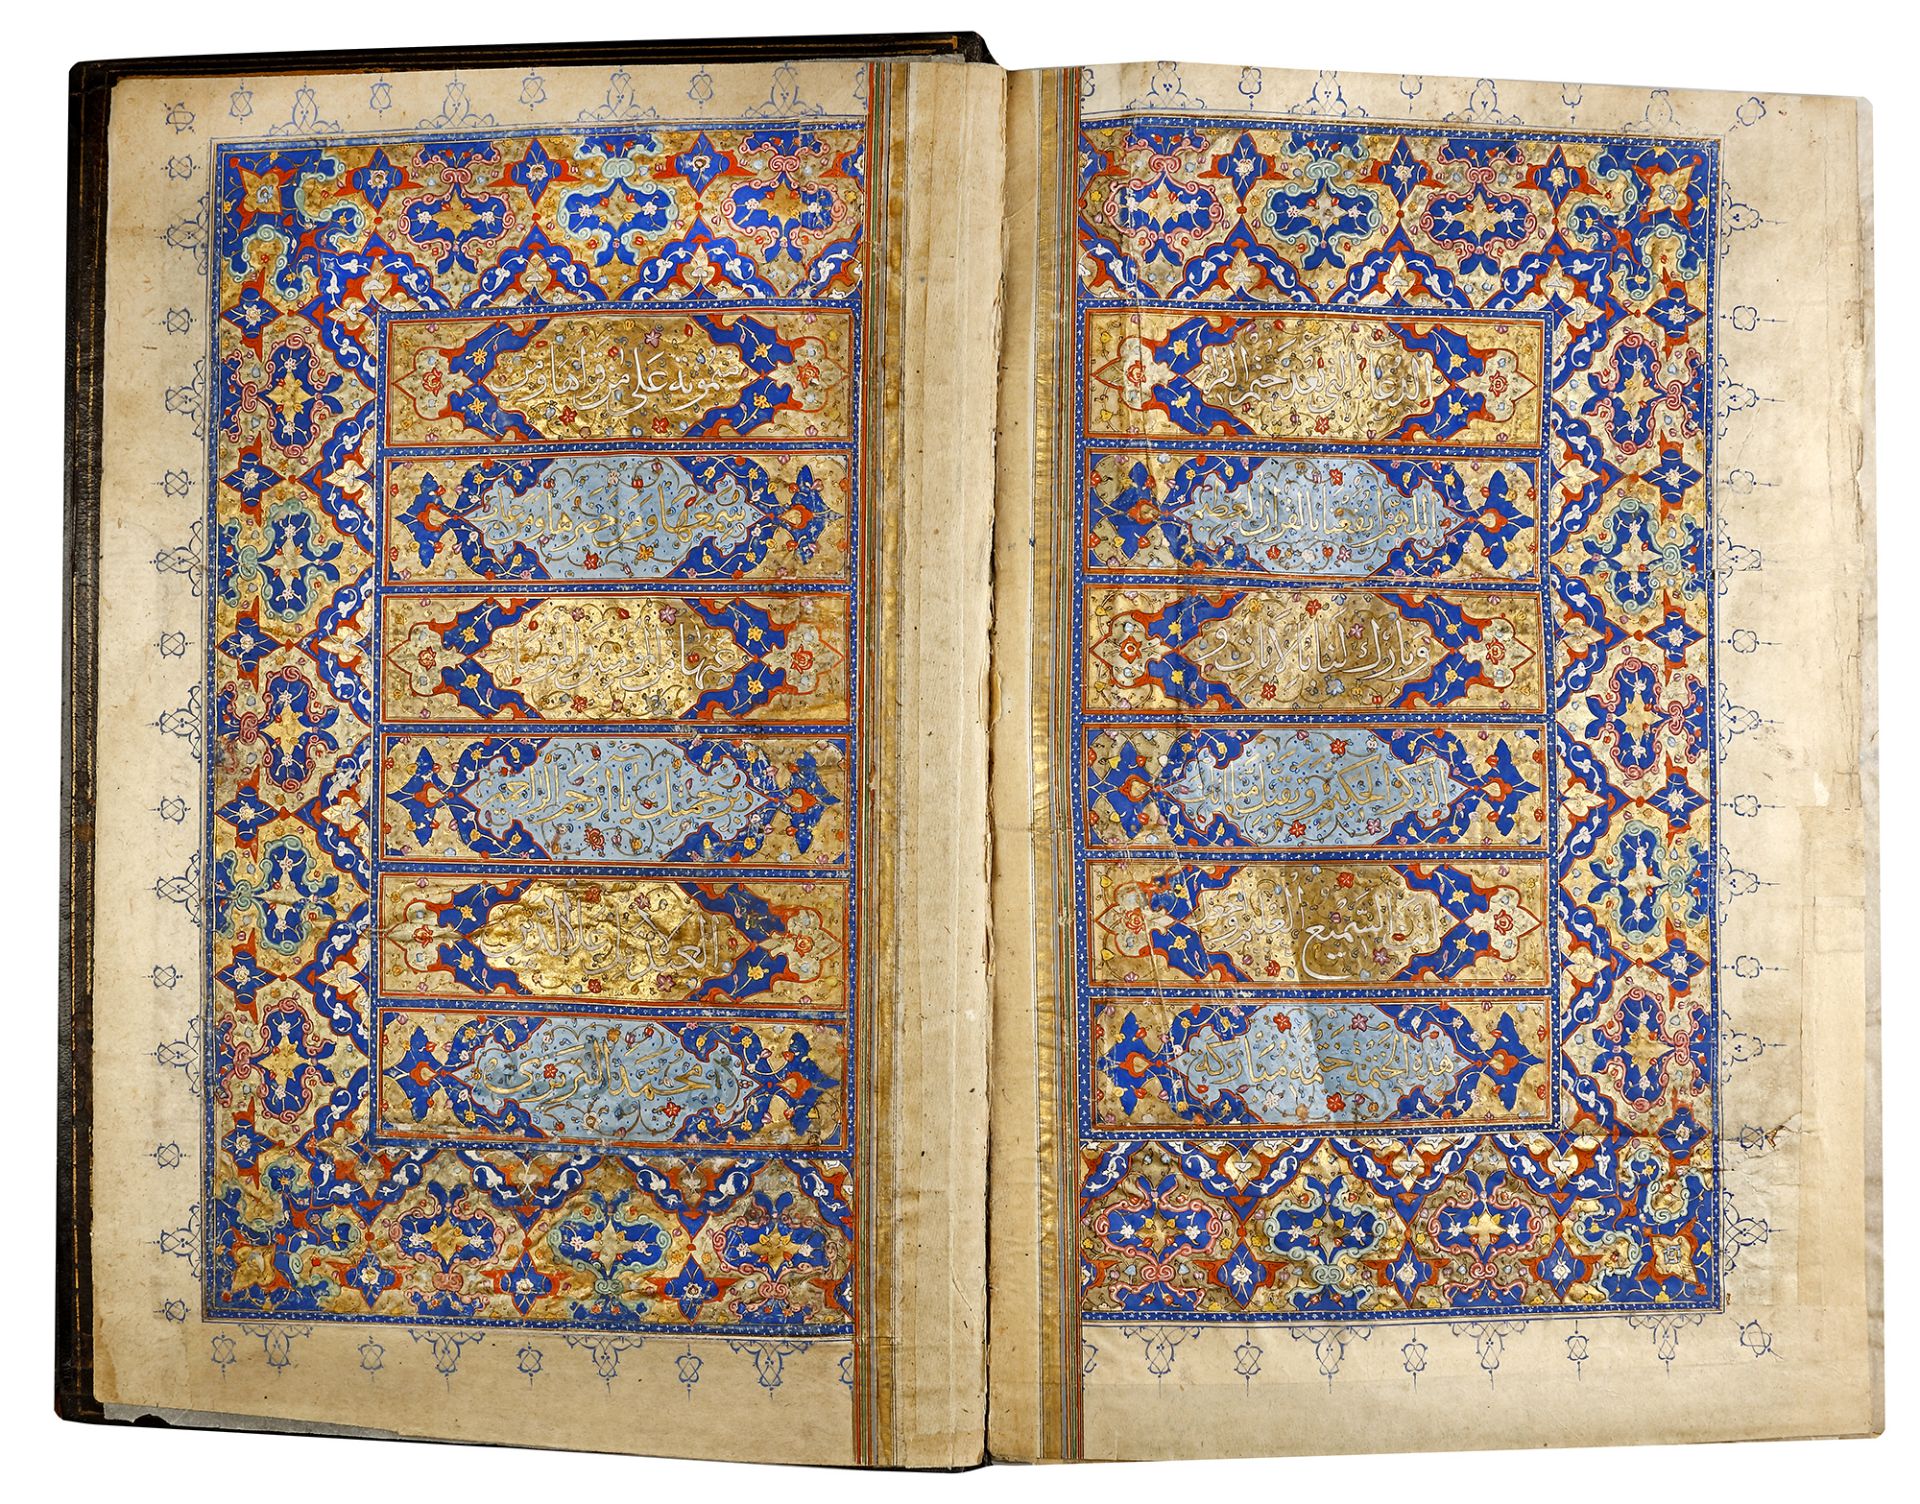 A LARGE ILLUMINATED QURAN, COPIED BY 'ALA'-AL-DIN MUHAMMAD AL-TABRIZI SAFAVID, PERSIA, 16TH CENT - Image 24 of 26